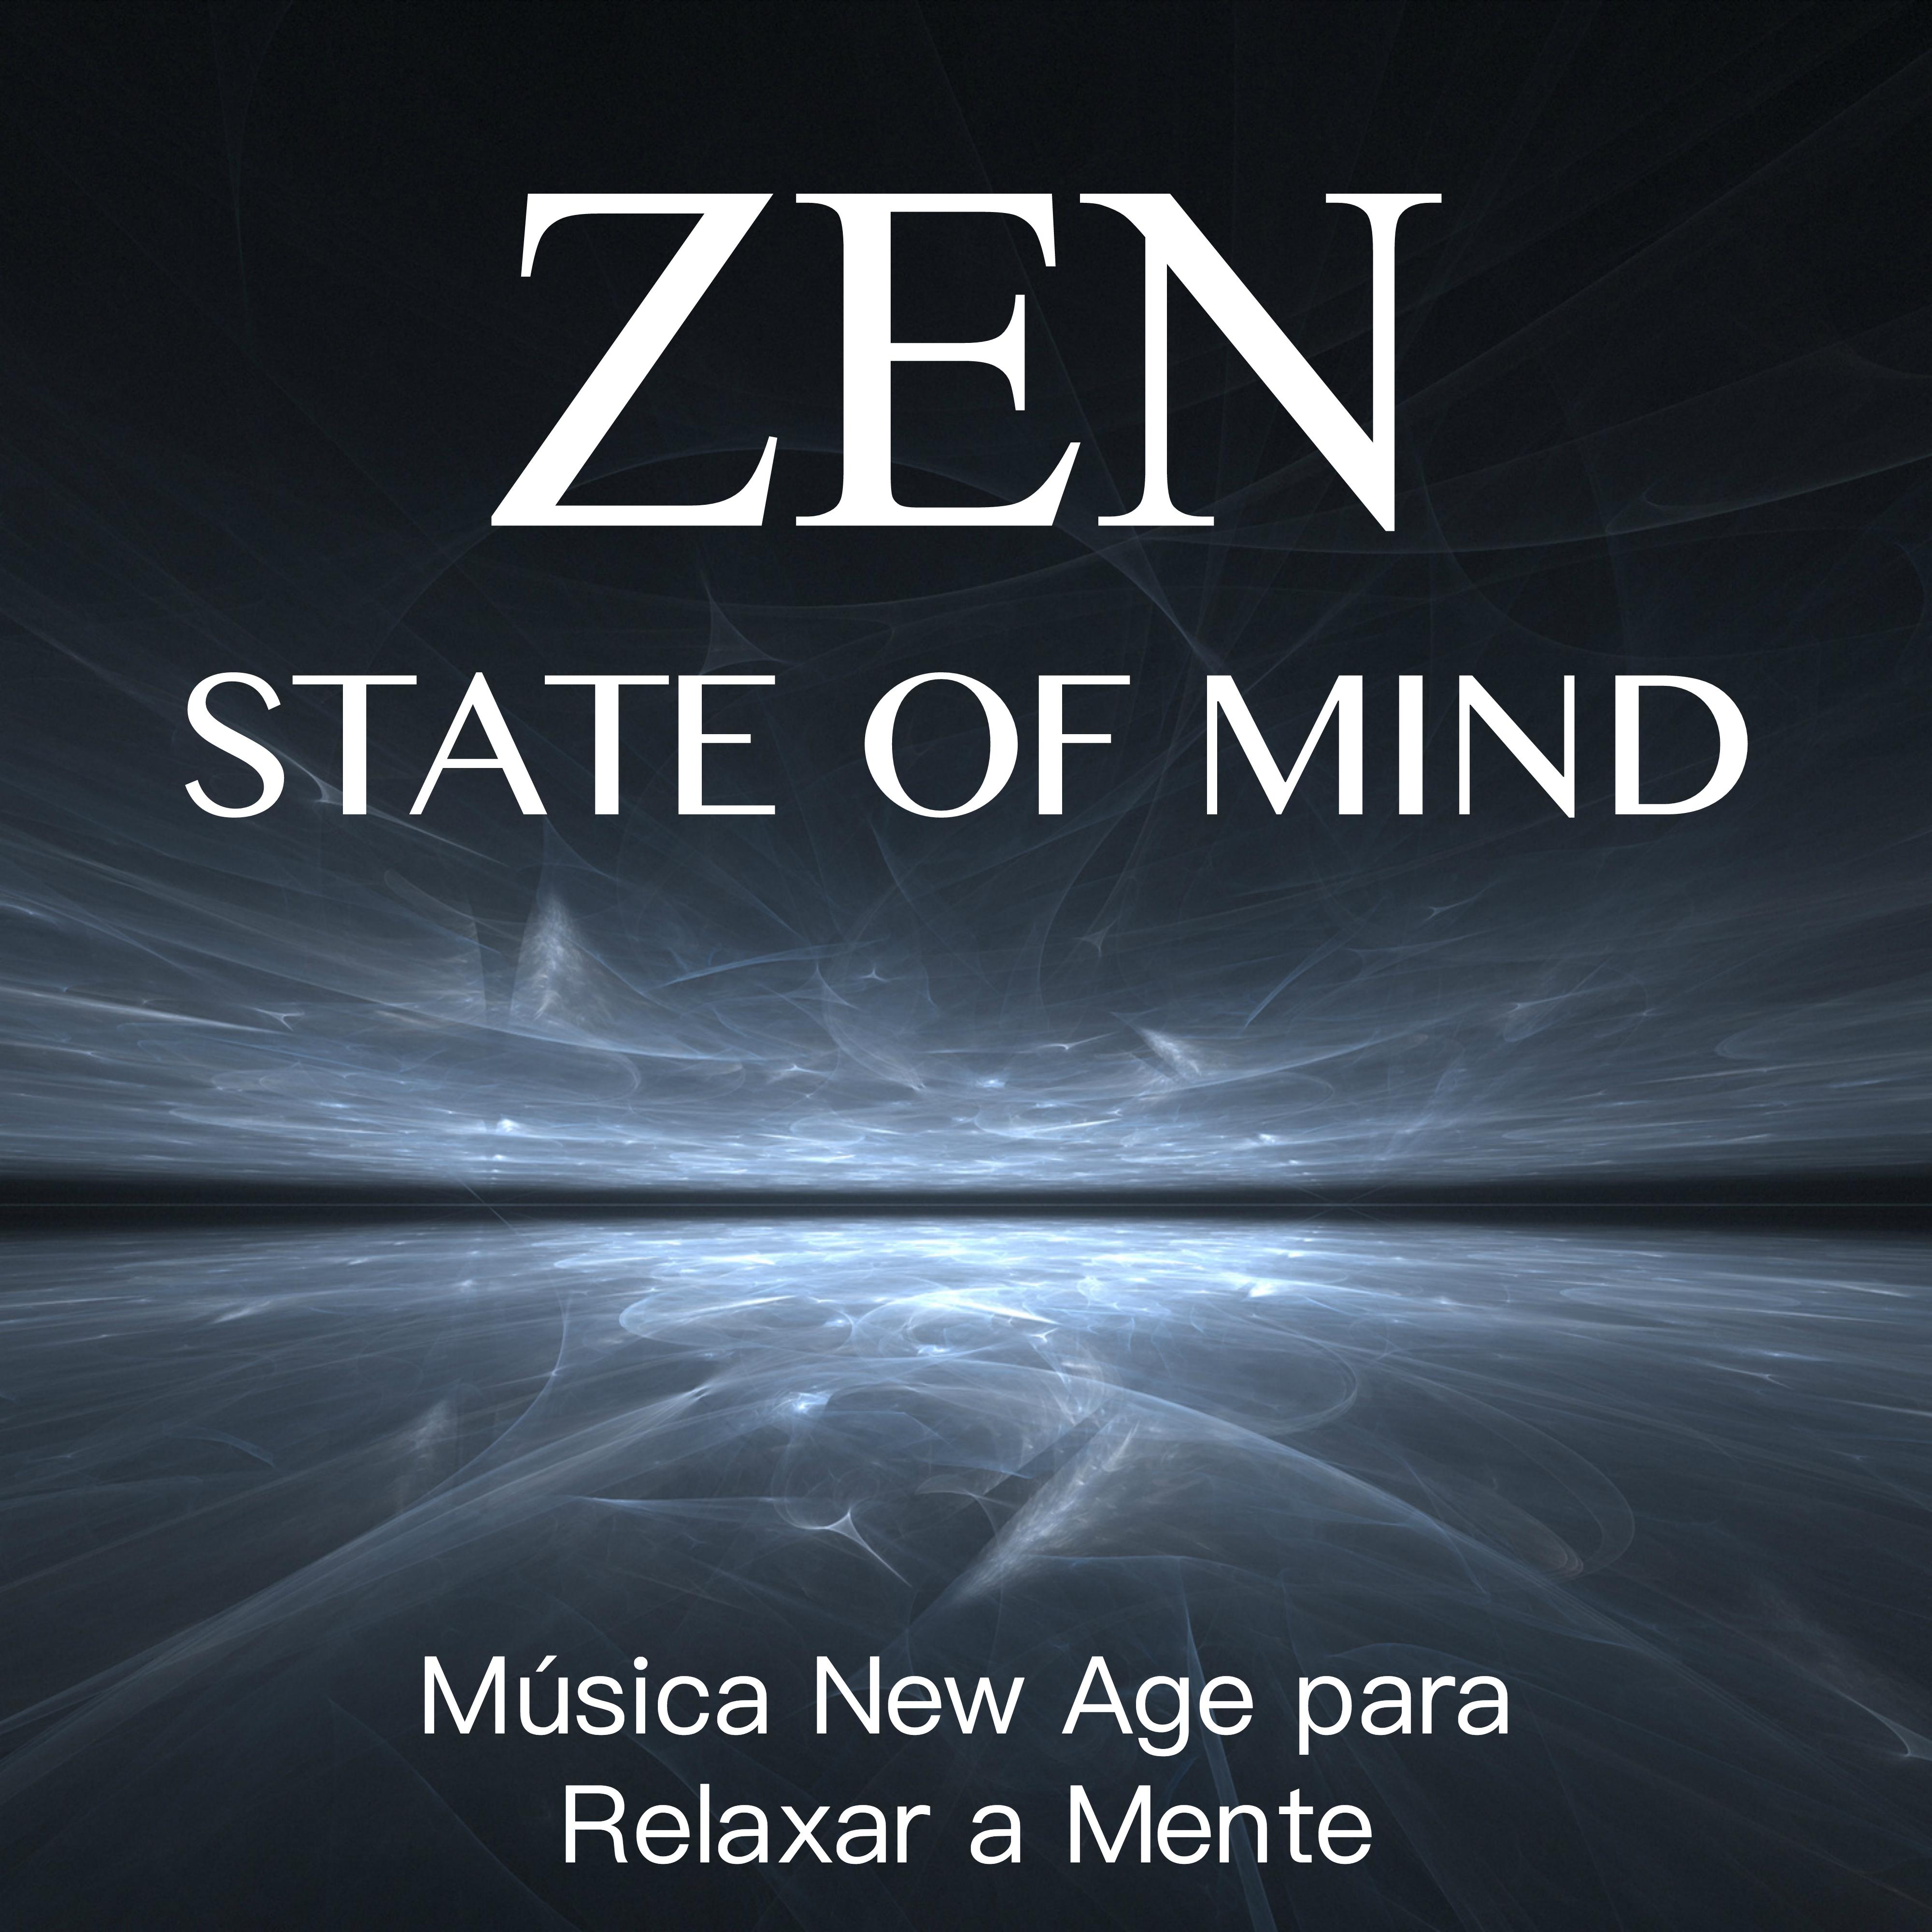 Zen State of Mind - Música Relaxante New Age para Relaxar a Mente con Sons da Natureza e Sons del Água pour Relaxe, Meditaçaõ, Dormir Bem, Massagem e Spa